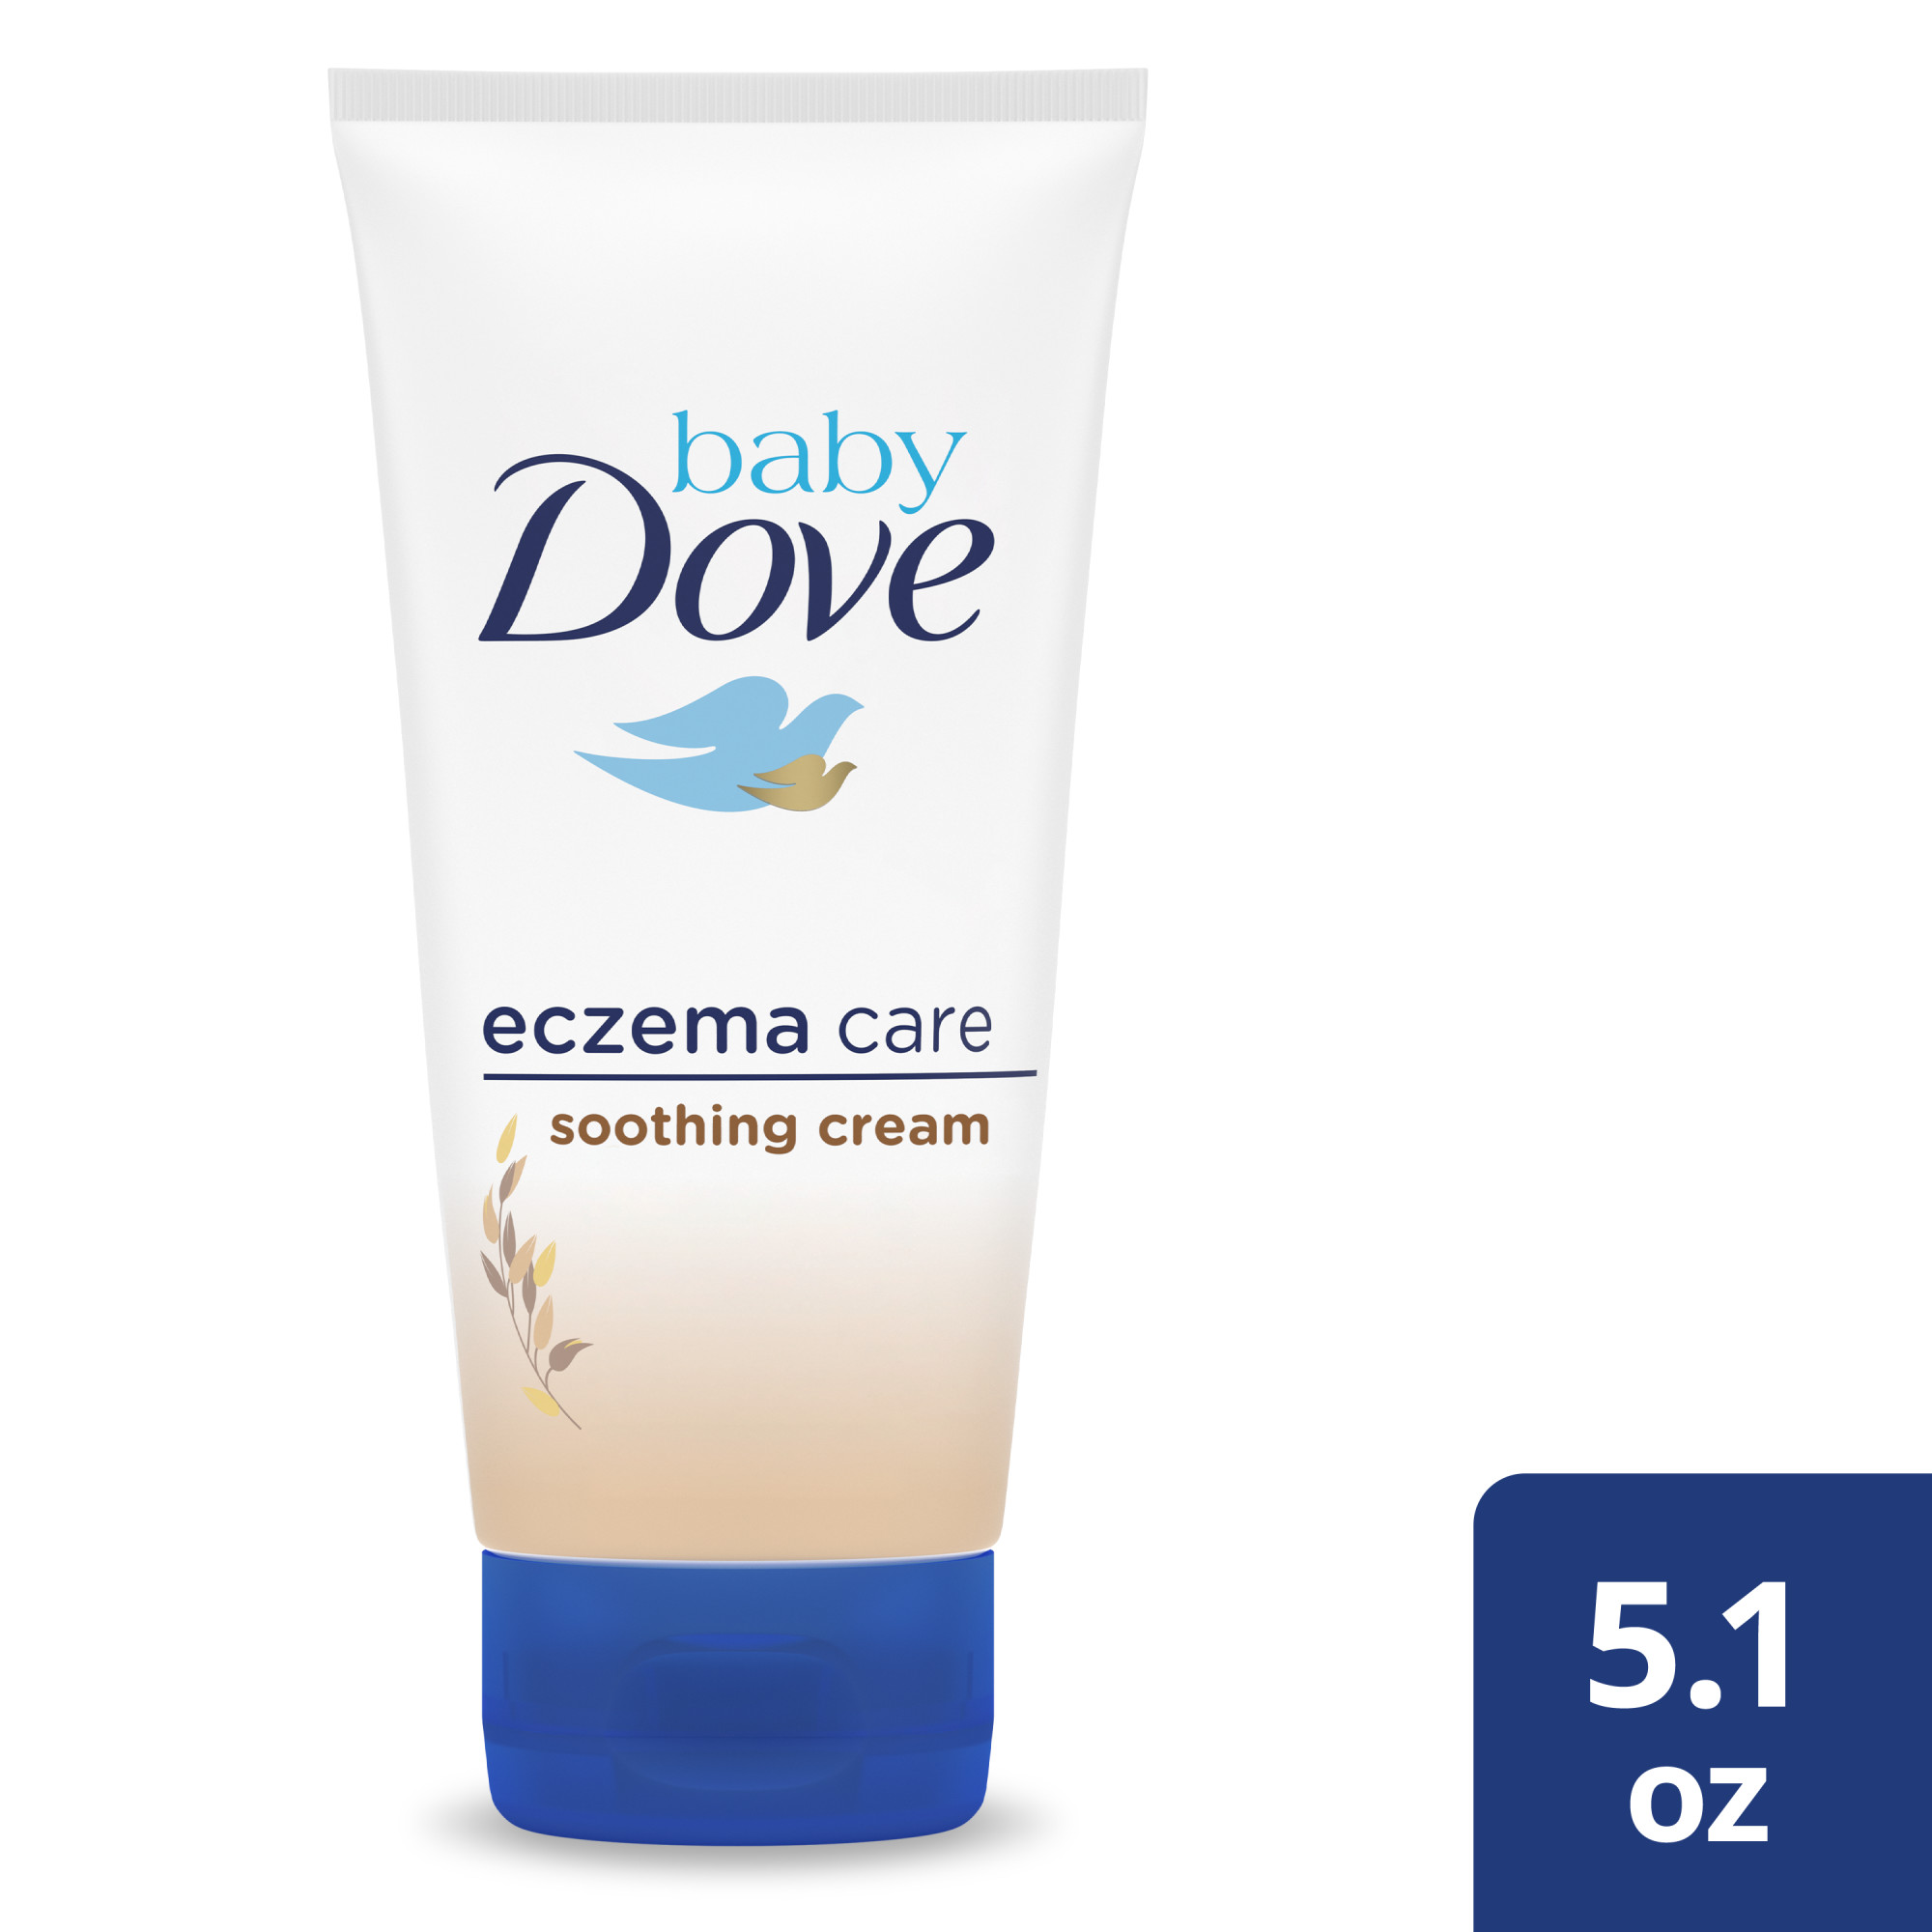 Baby Dove Baby Eczema Care Soothing Cream, 5.1 oz - image 1 of 3